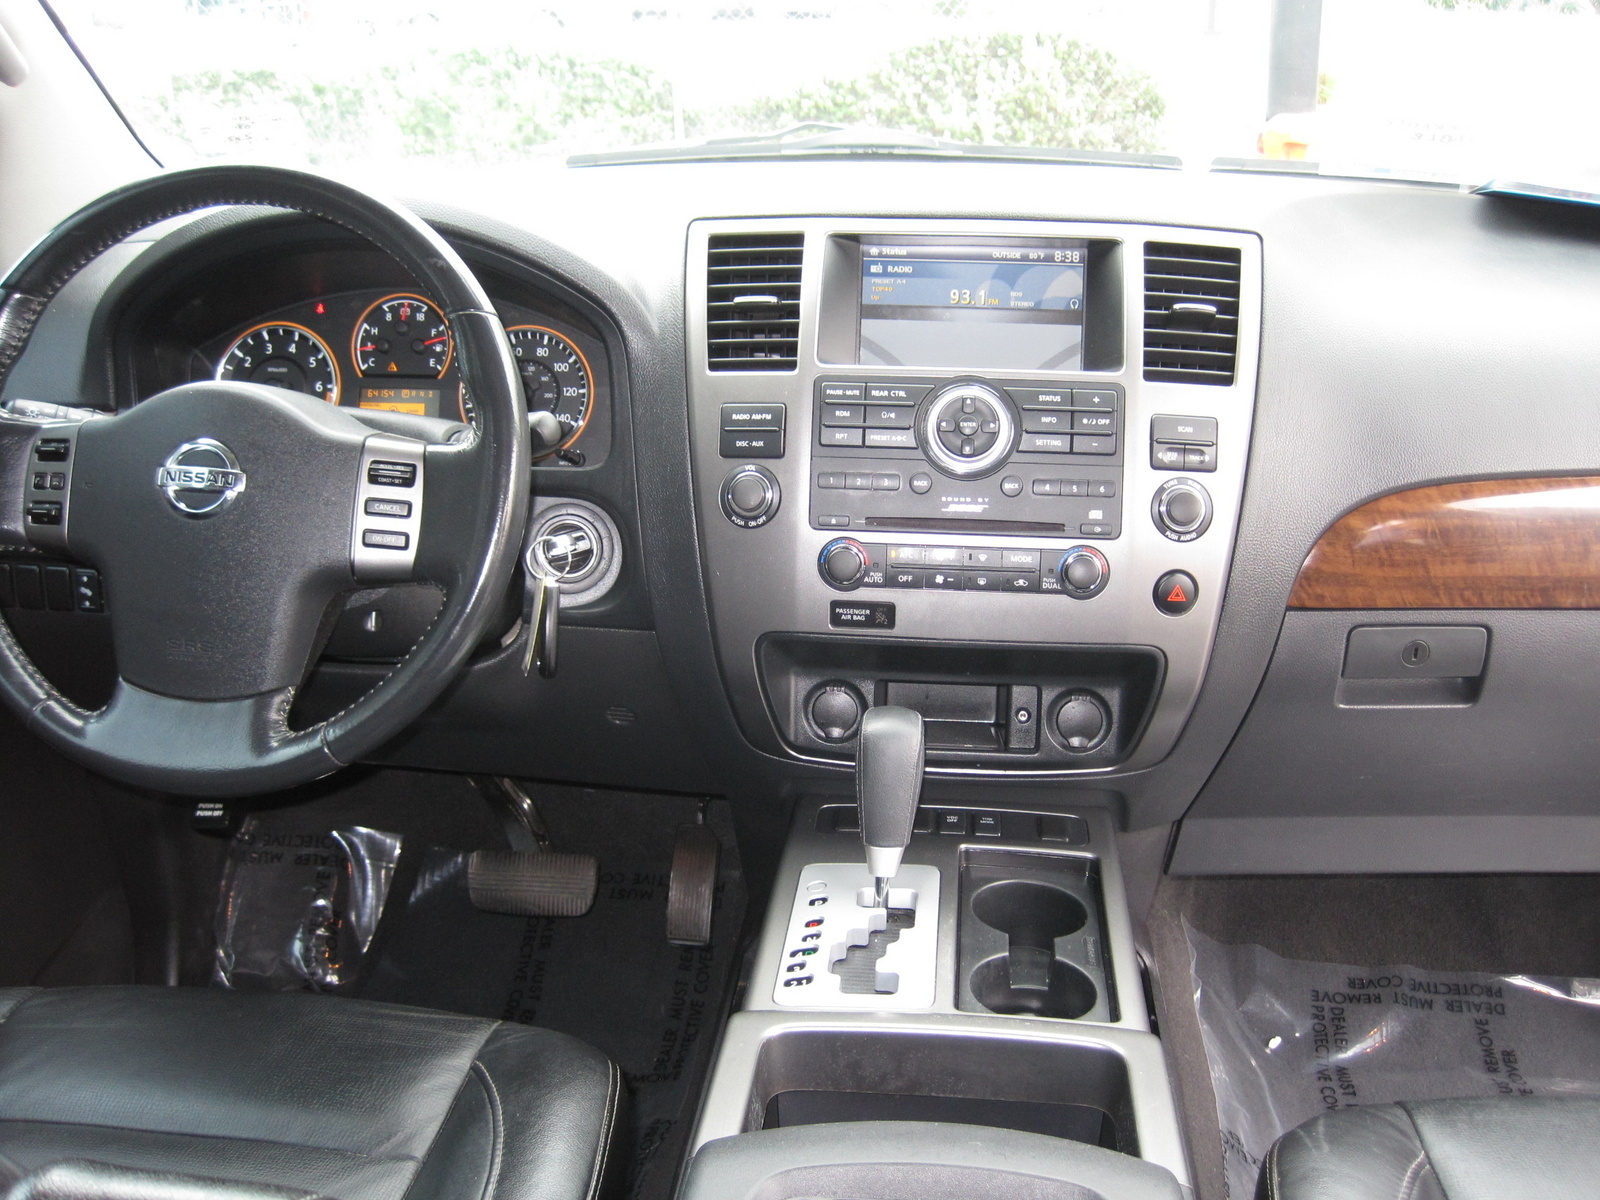 2010 Nissan armada trim levels #3